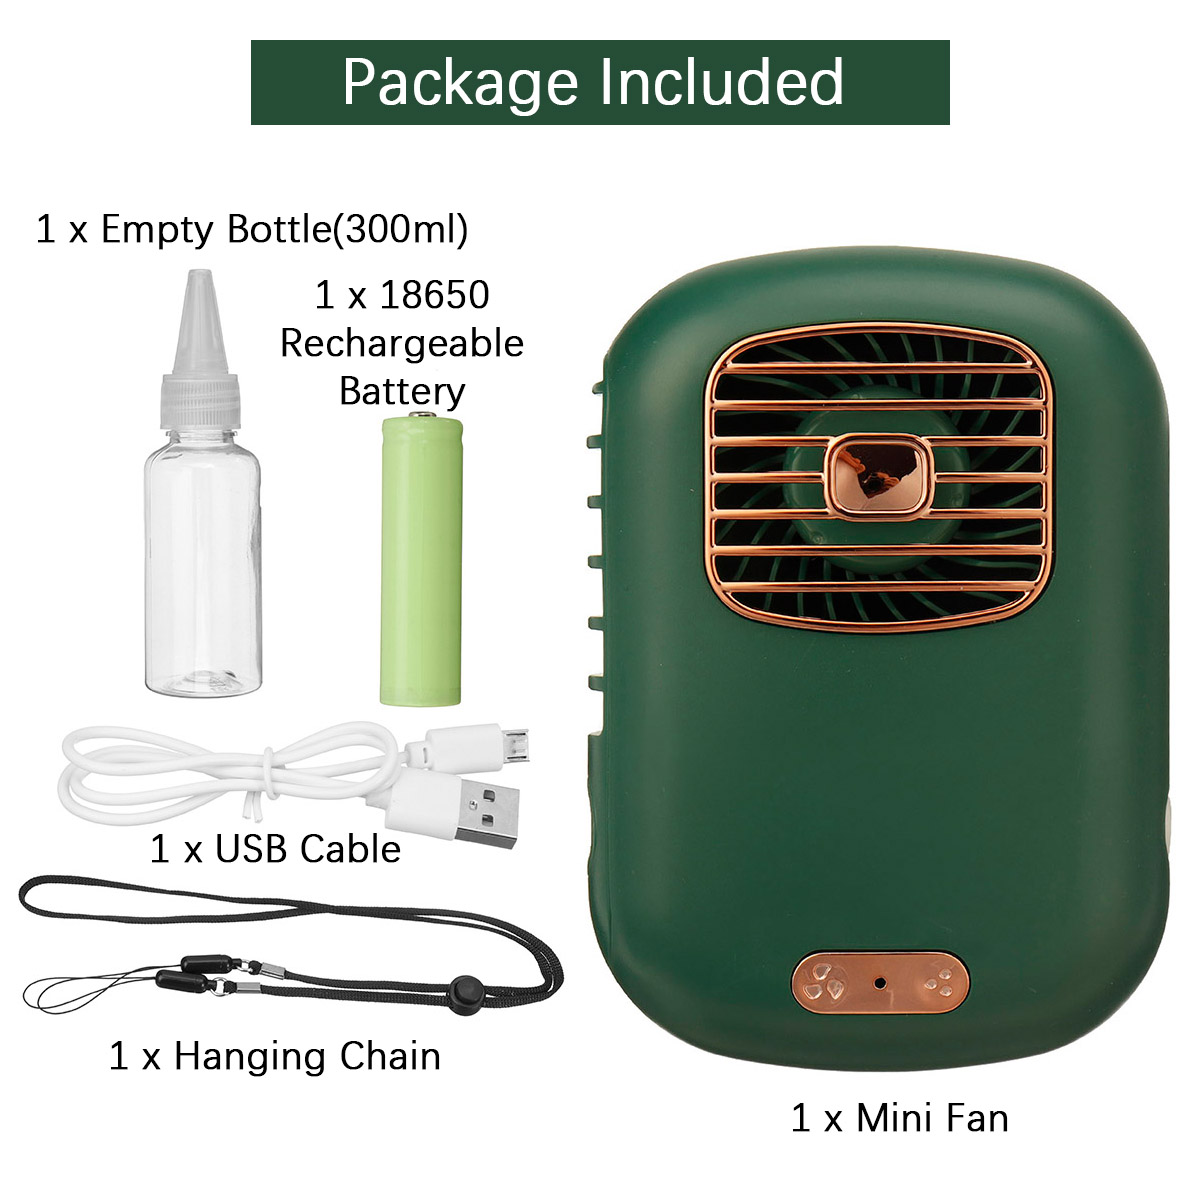 Portable-Mini-Handheld-Hanging-Neck-3-Level-Wind-Speed-Spray-Moisturizing-USB-Fan-Cooler-1861414-8